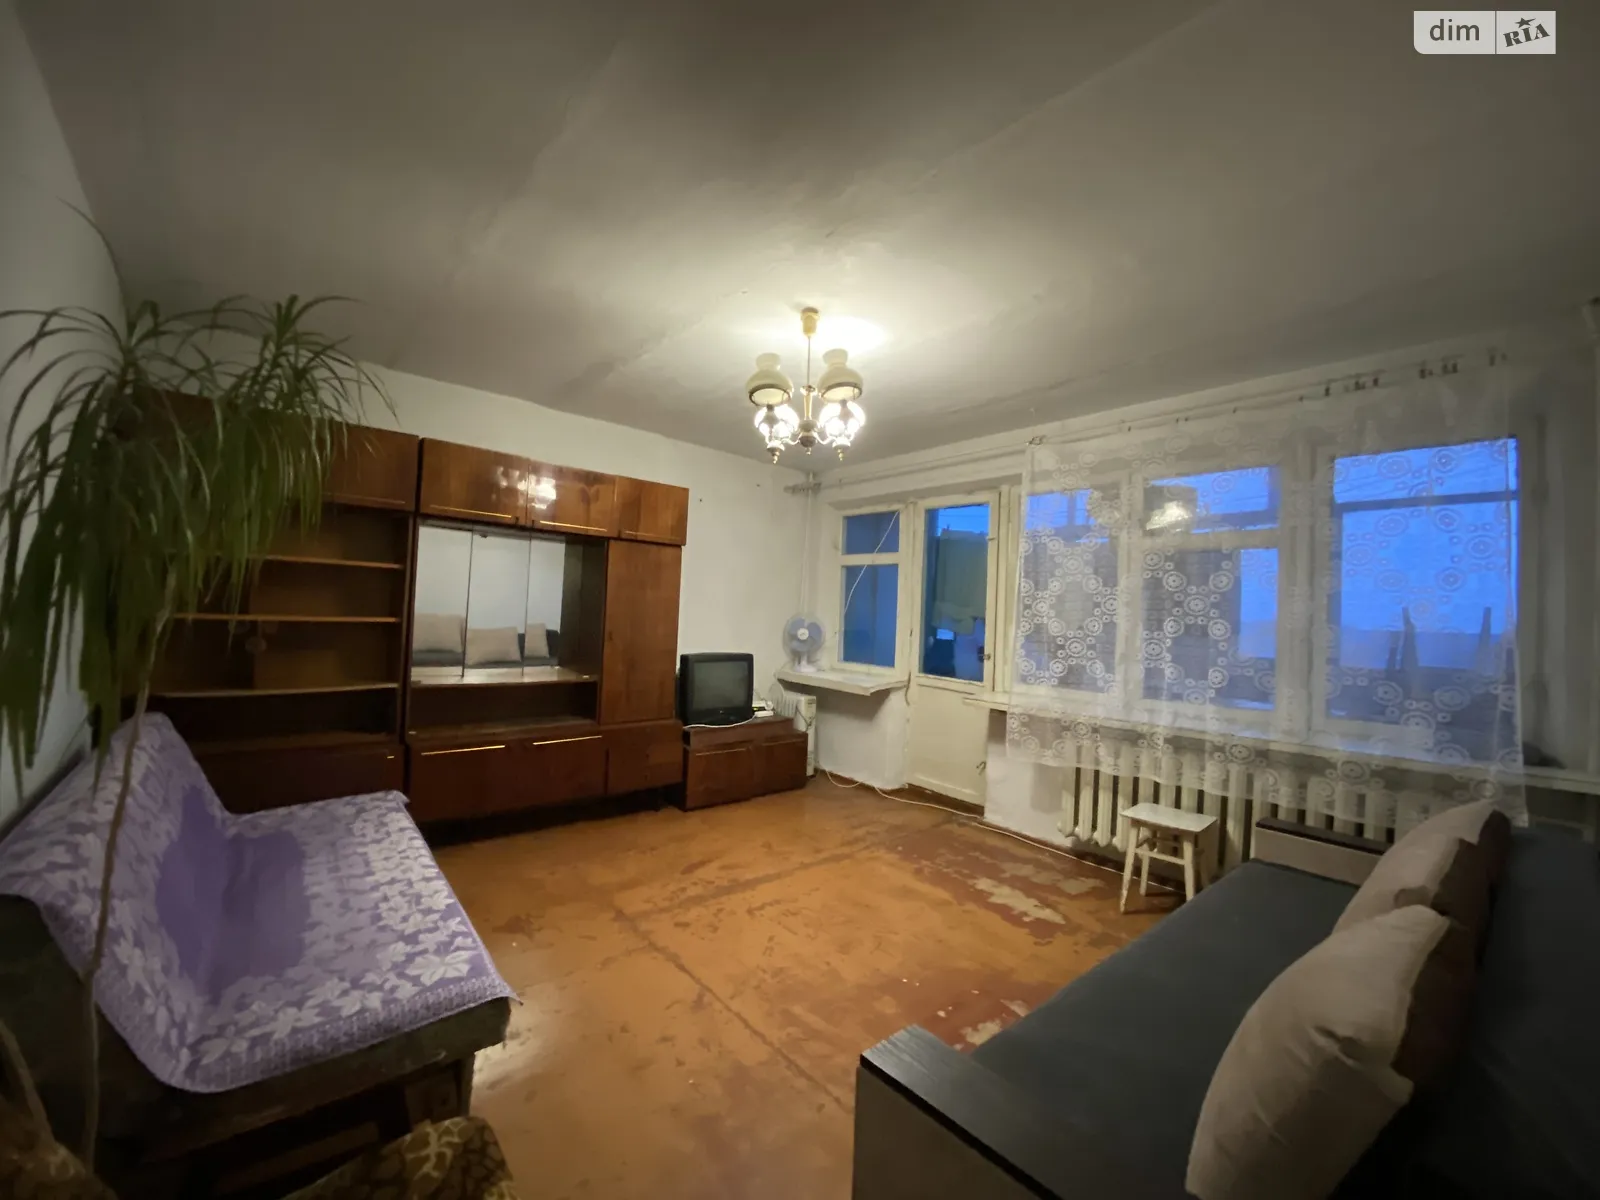 Сдается в аренду 2-комнатная квартира 64 кв. м в Виннице, ул. Вячеслава Черновола, 4 - фото 1